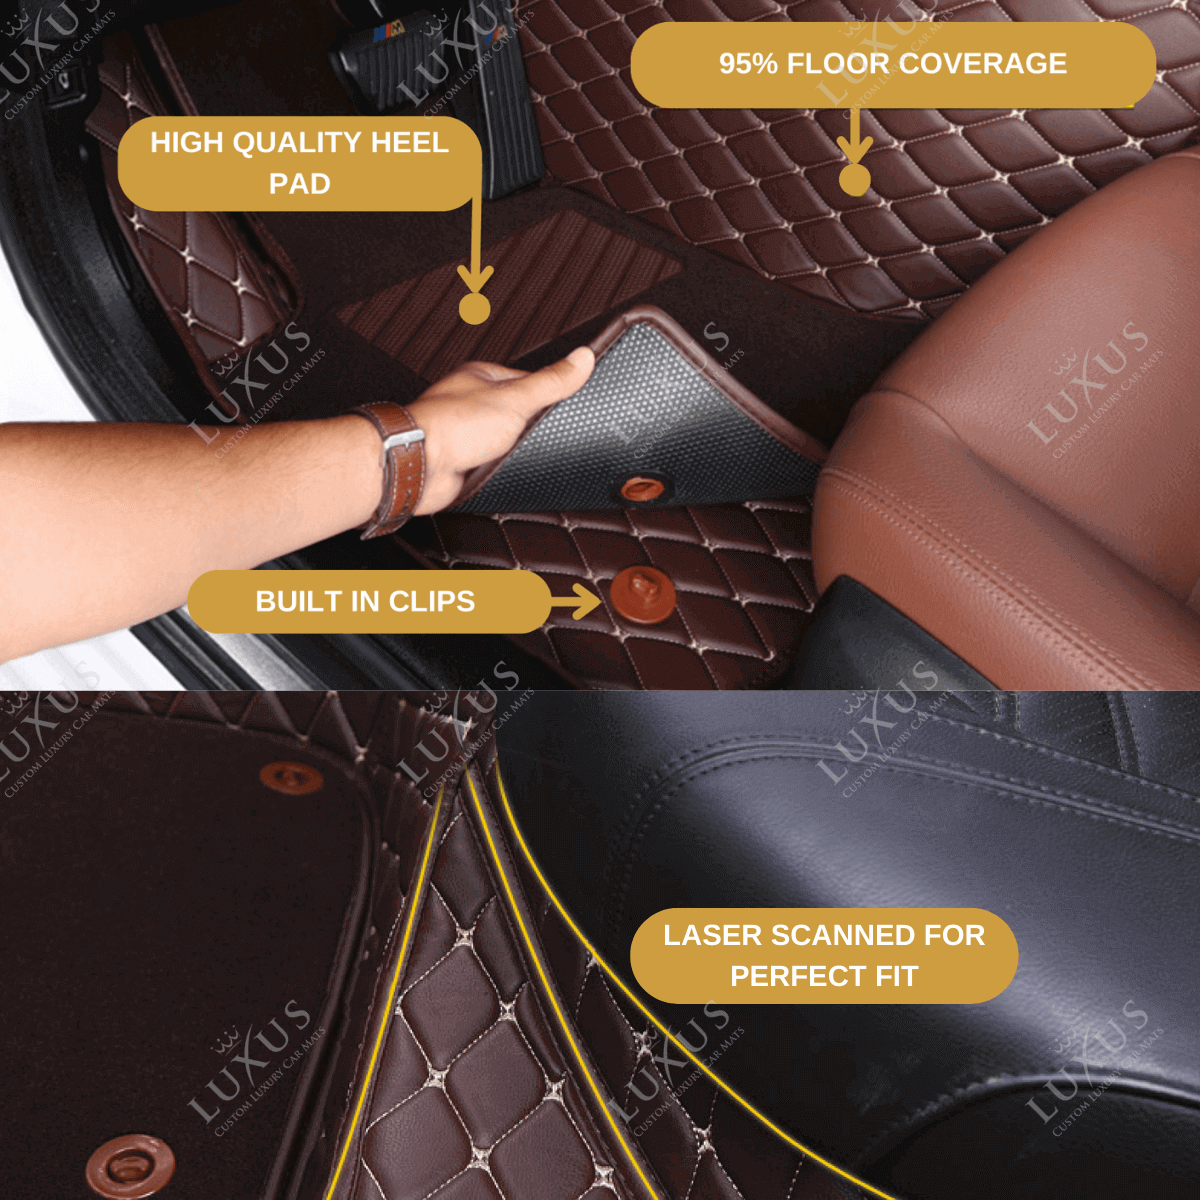 Black & White Stitching Honeycomb Base & Beige Top Carpet Double Layer Luxury Car Mats Set